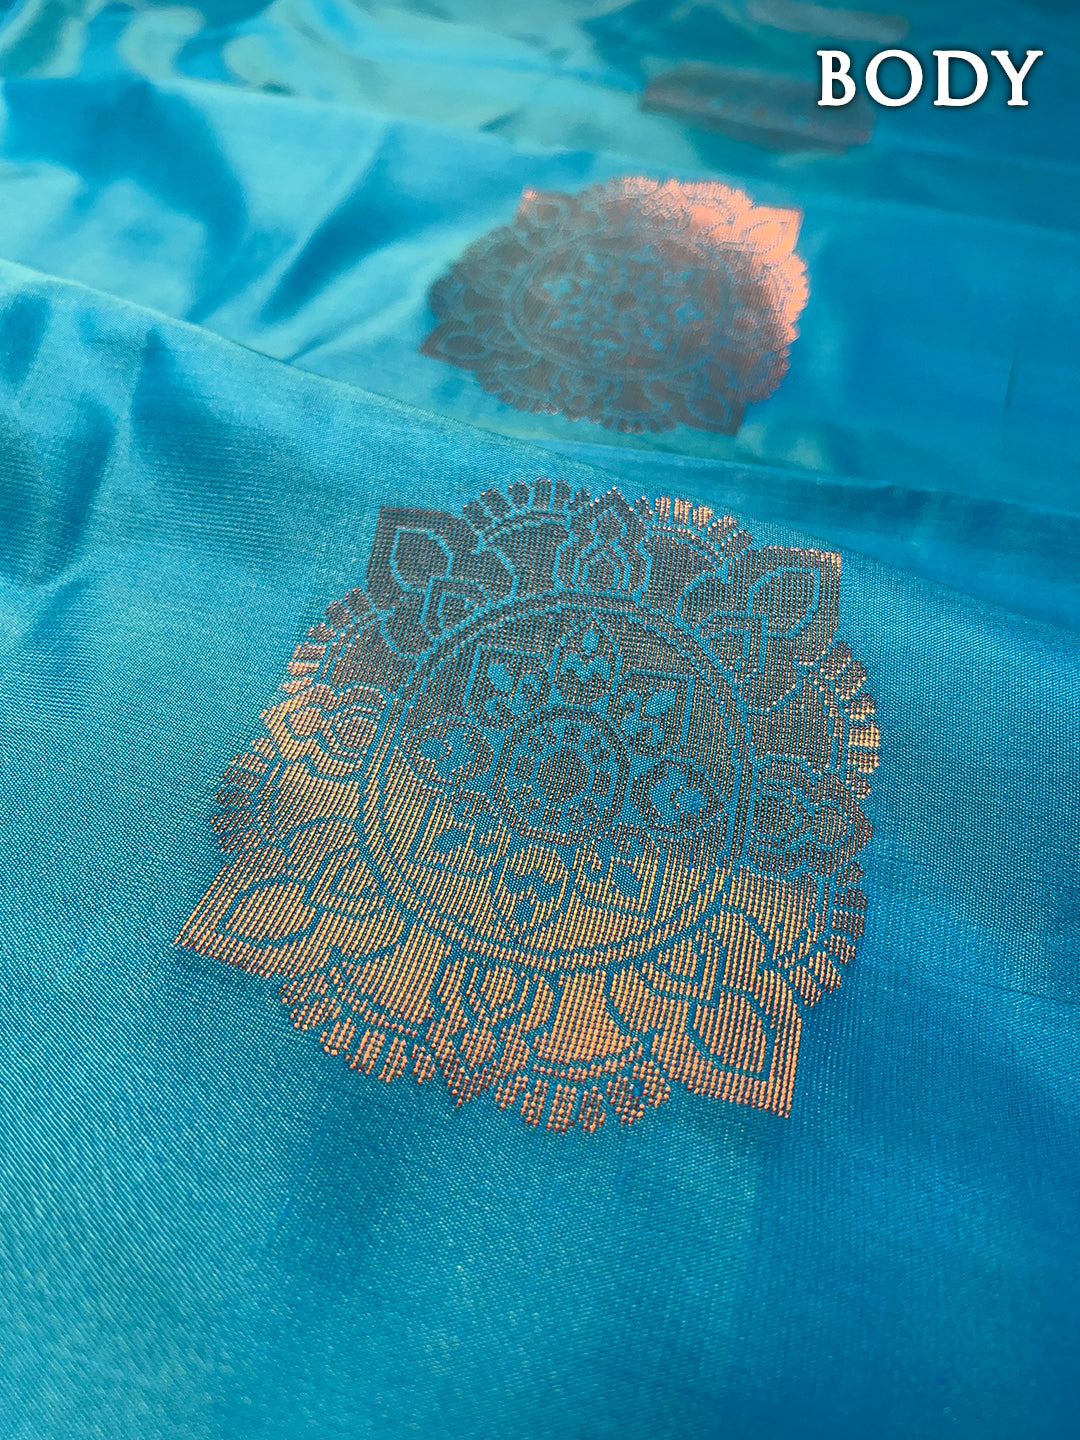 Dual color of blue and violet kanchipuram semi soft silk saree